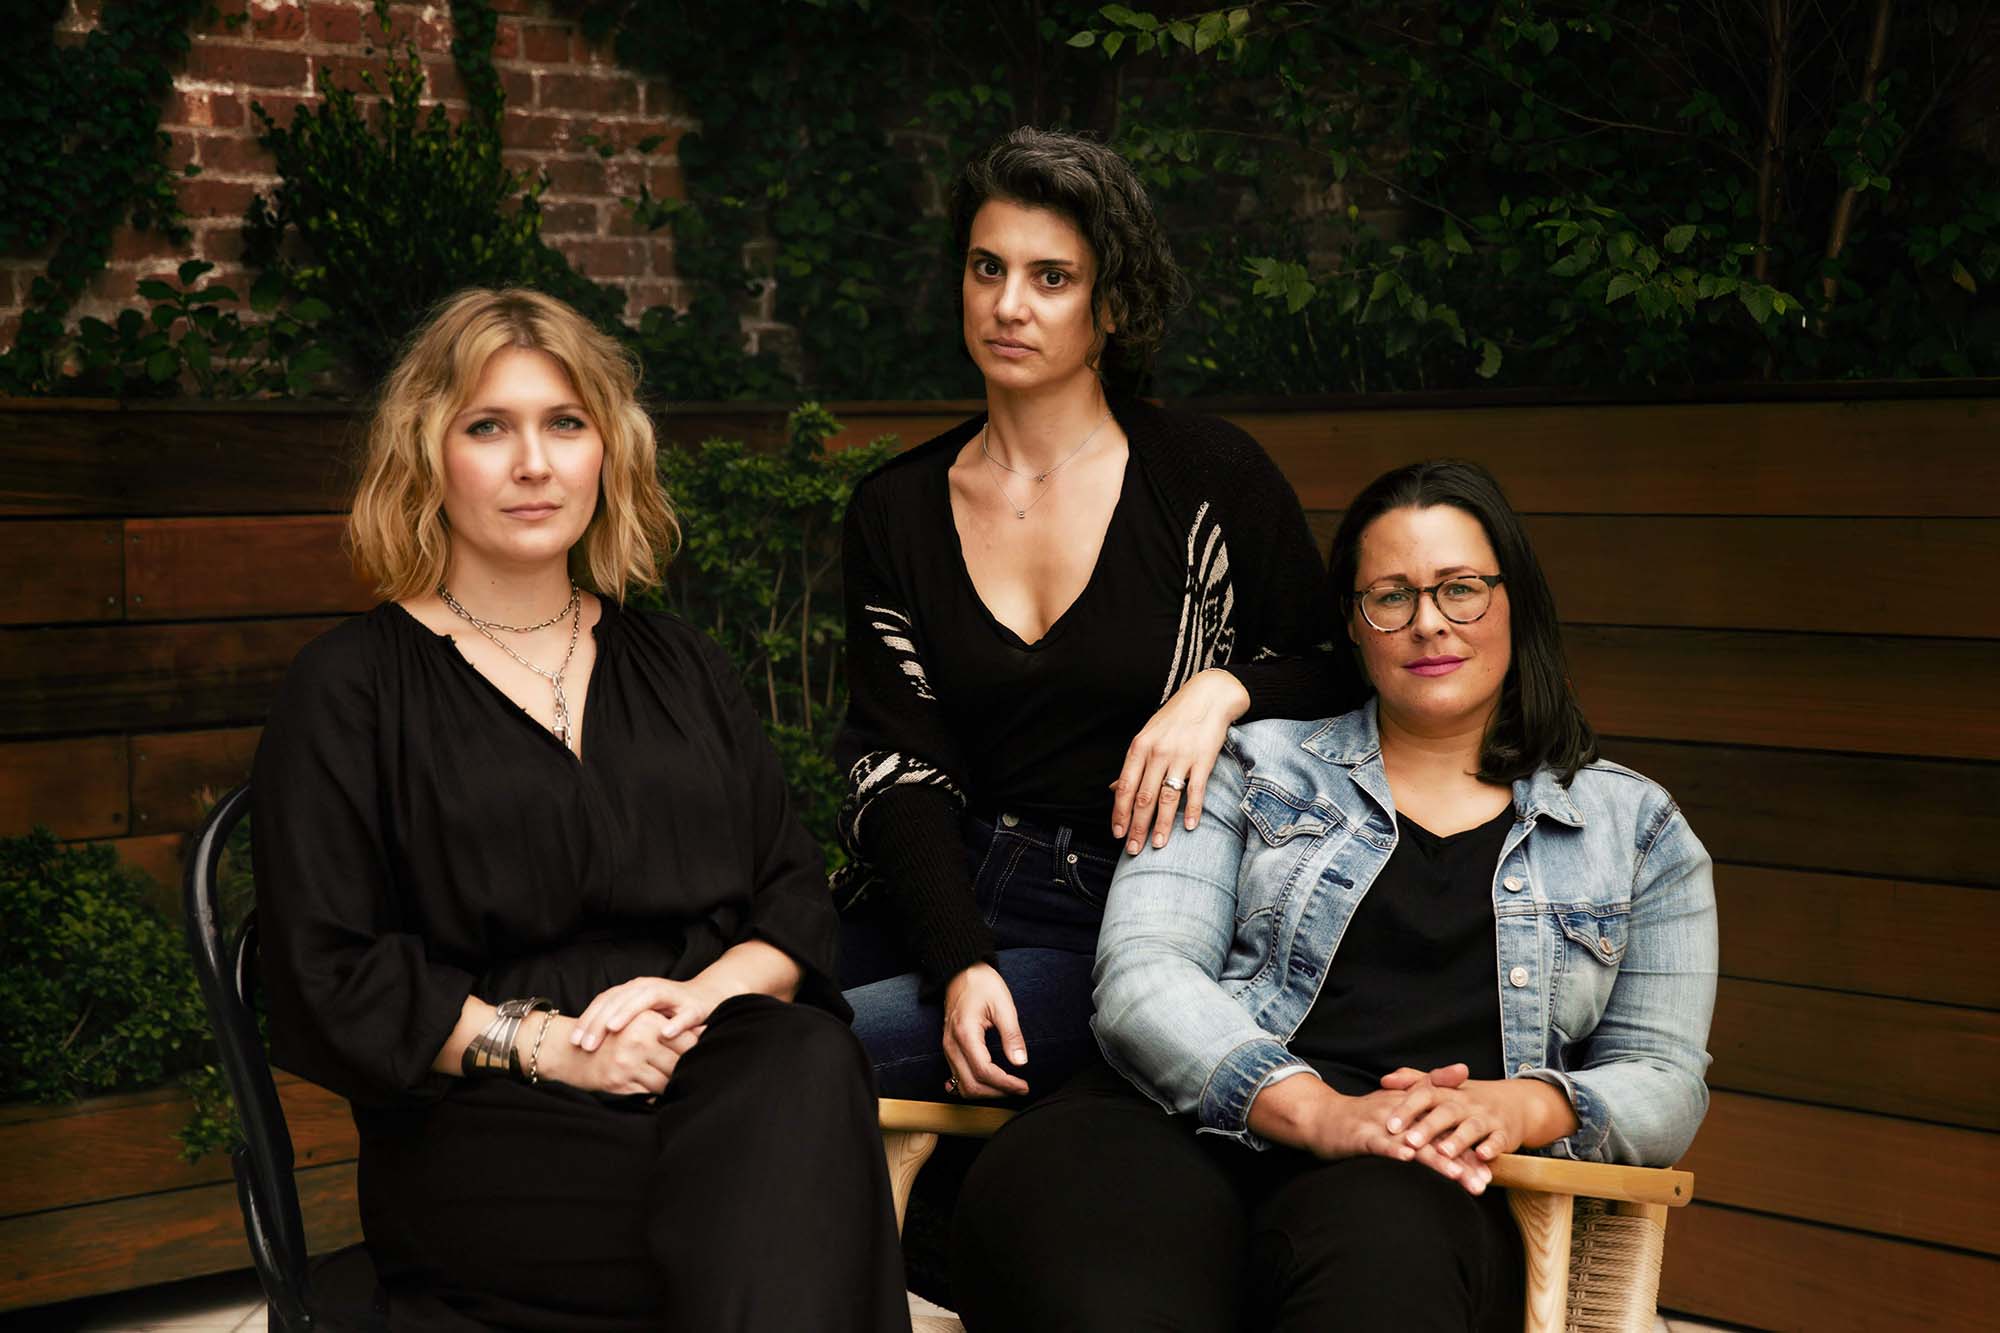 Liz Murray, Elizabeth Meltz and Erin Fairbanks (L to R) founded Women in Hospitality United. Photo by Bridget Shevlin